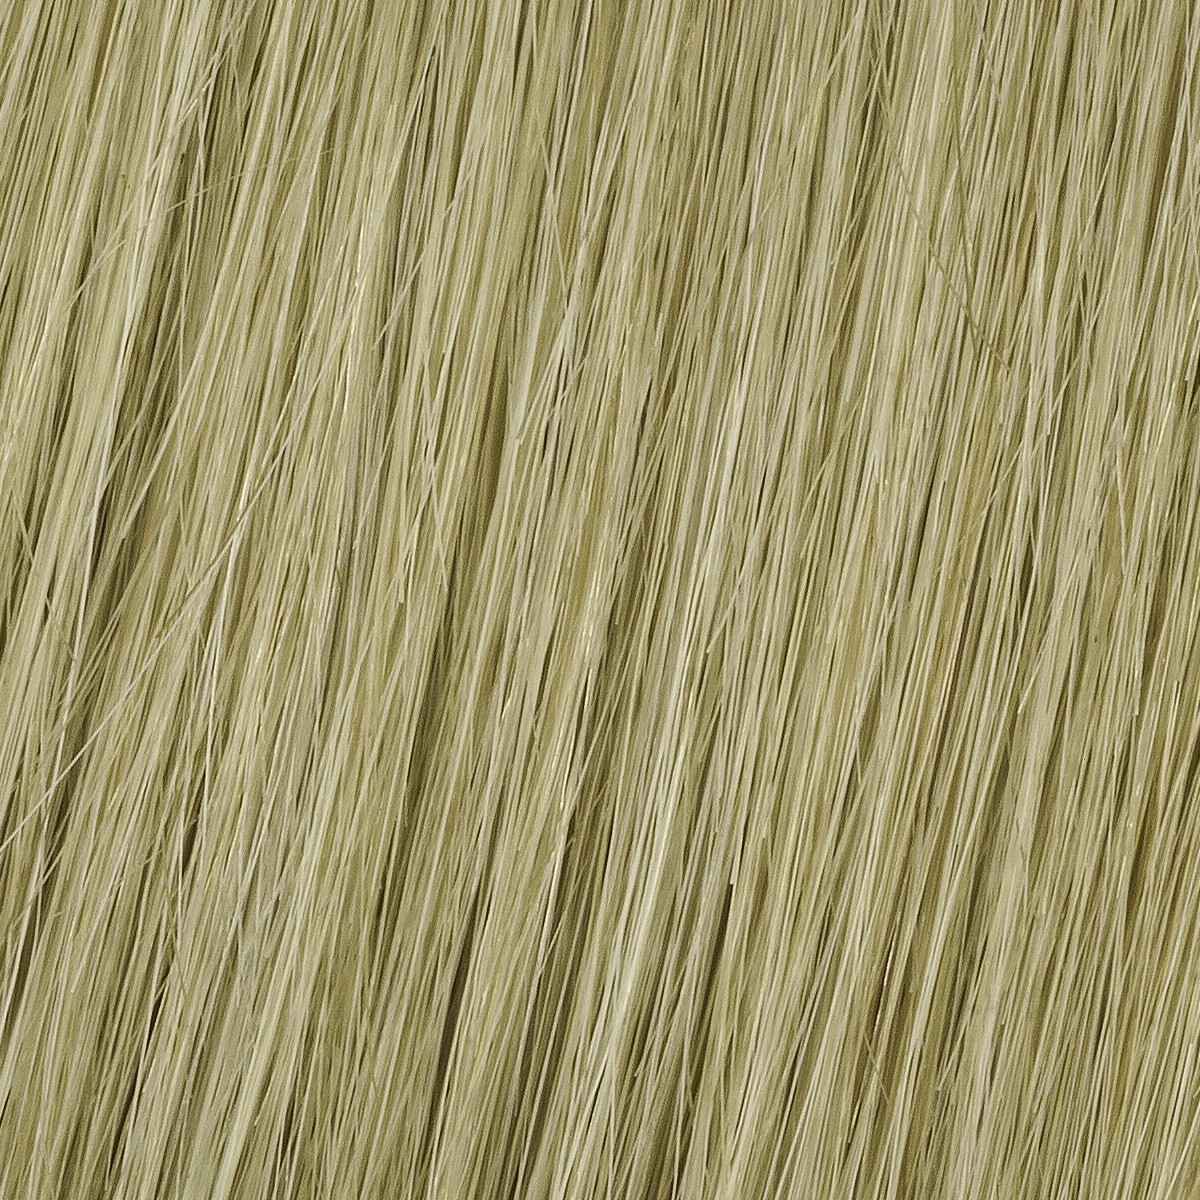 R14/88H Golden Wheat Human Hair